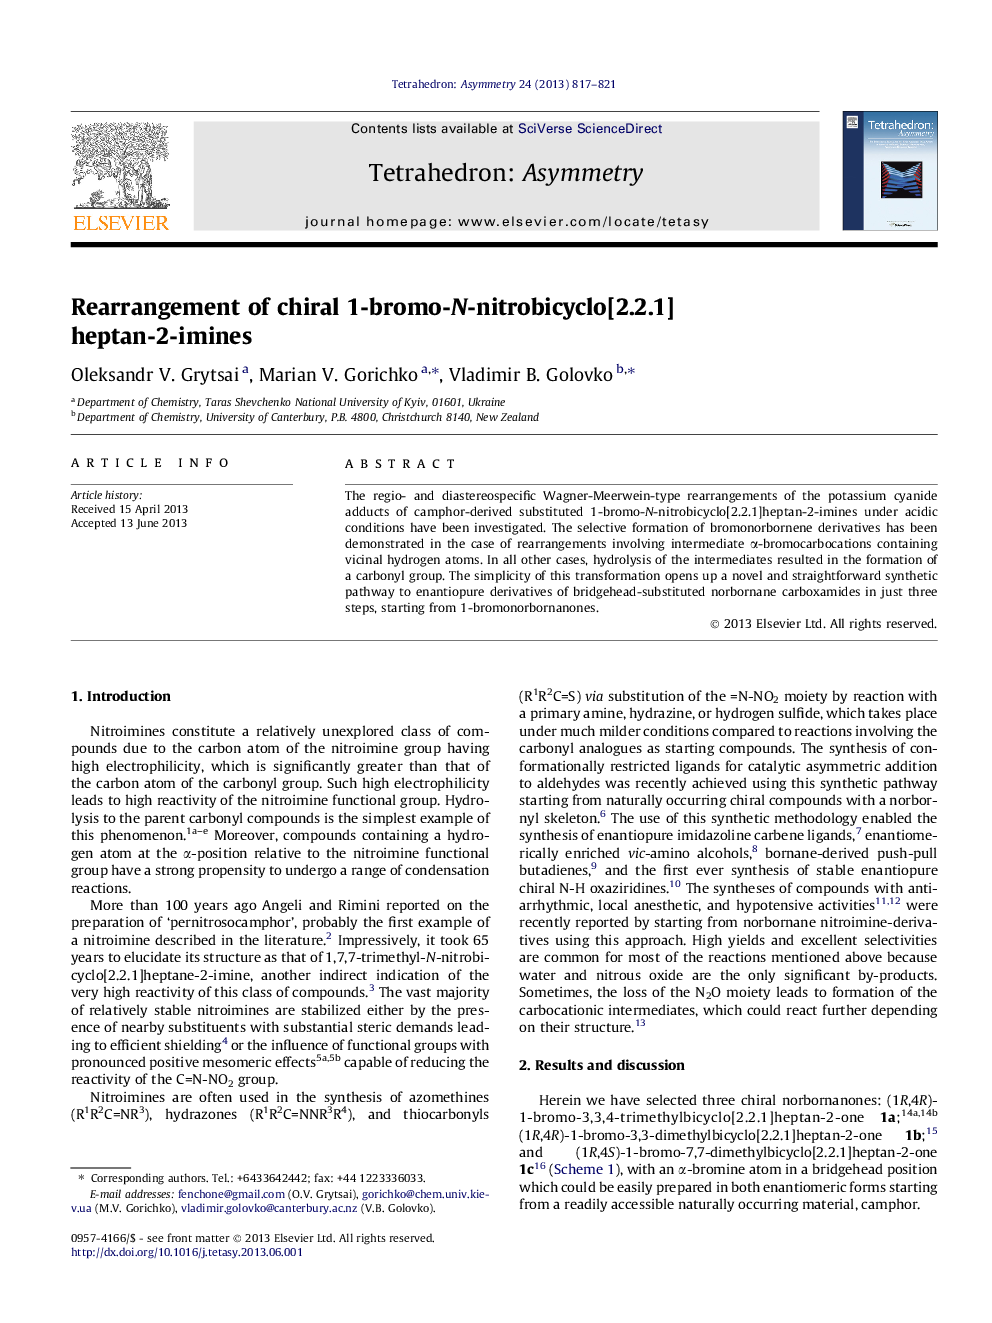 Rearrangement of chiral 1-bromo-N-nitrobicyclo[2.2.1]heptan-2-imines